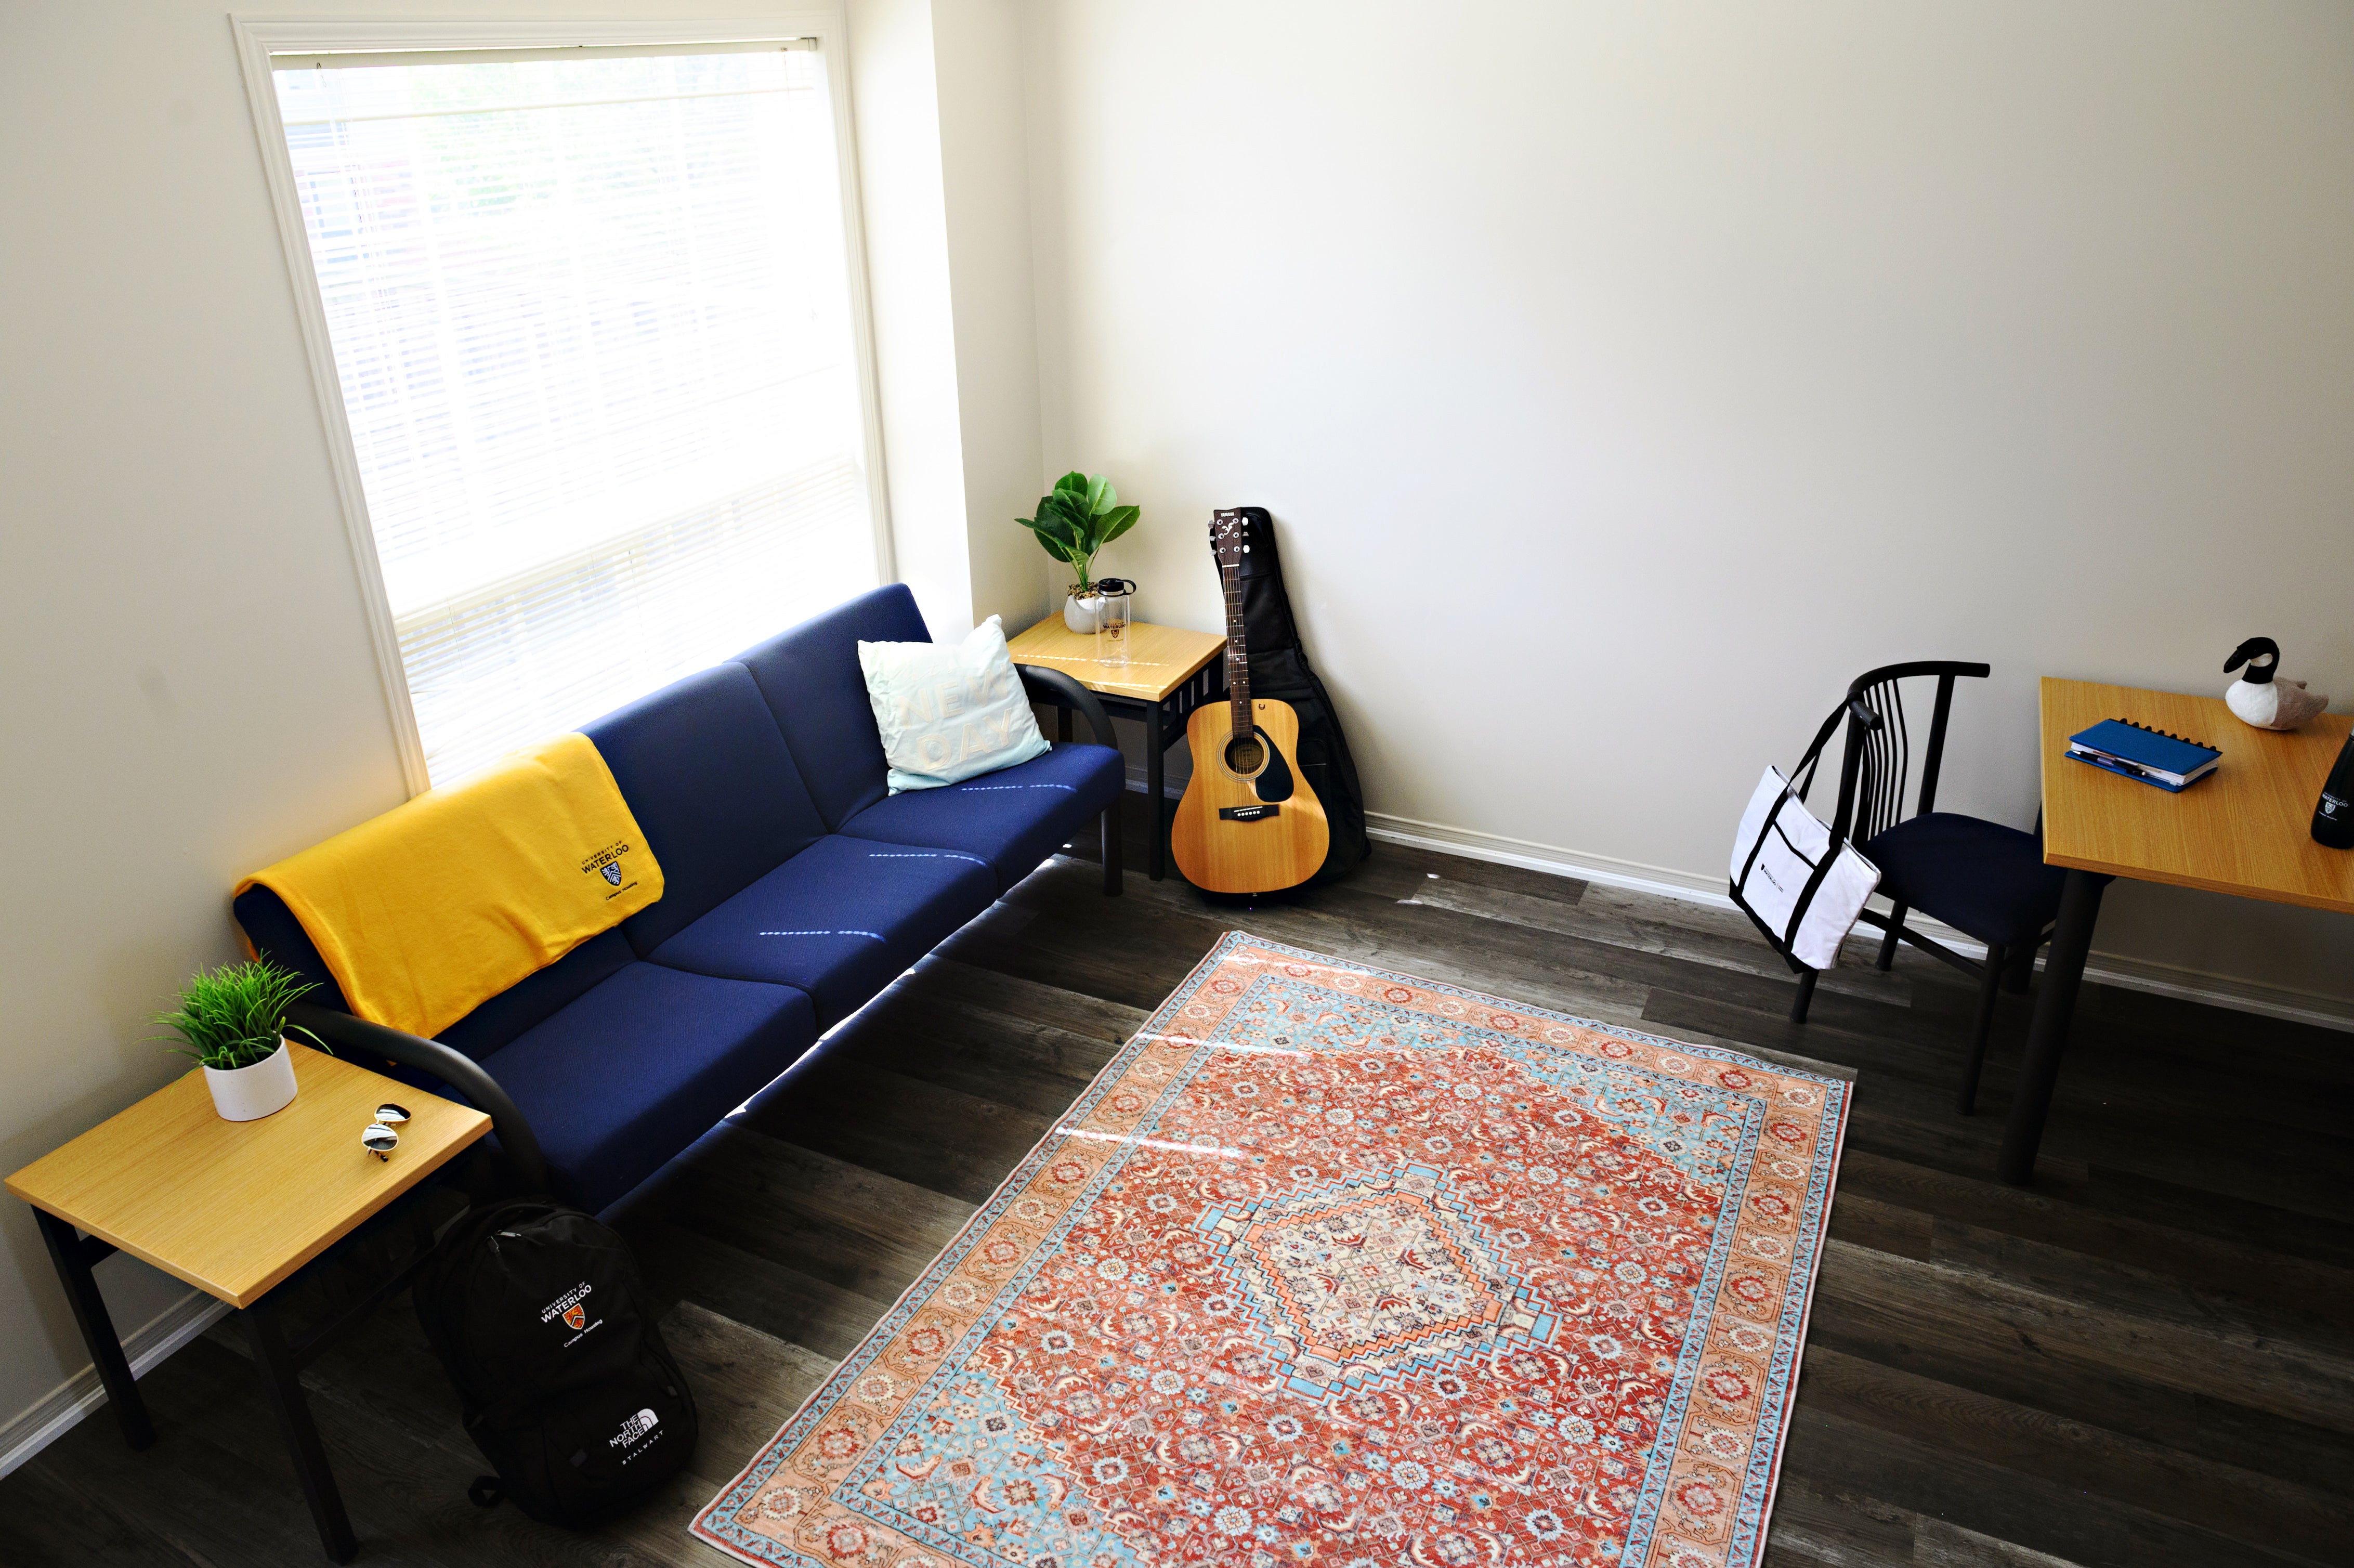 CLV-North furnished living room